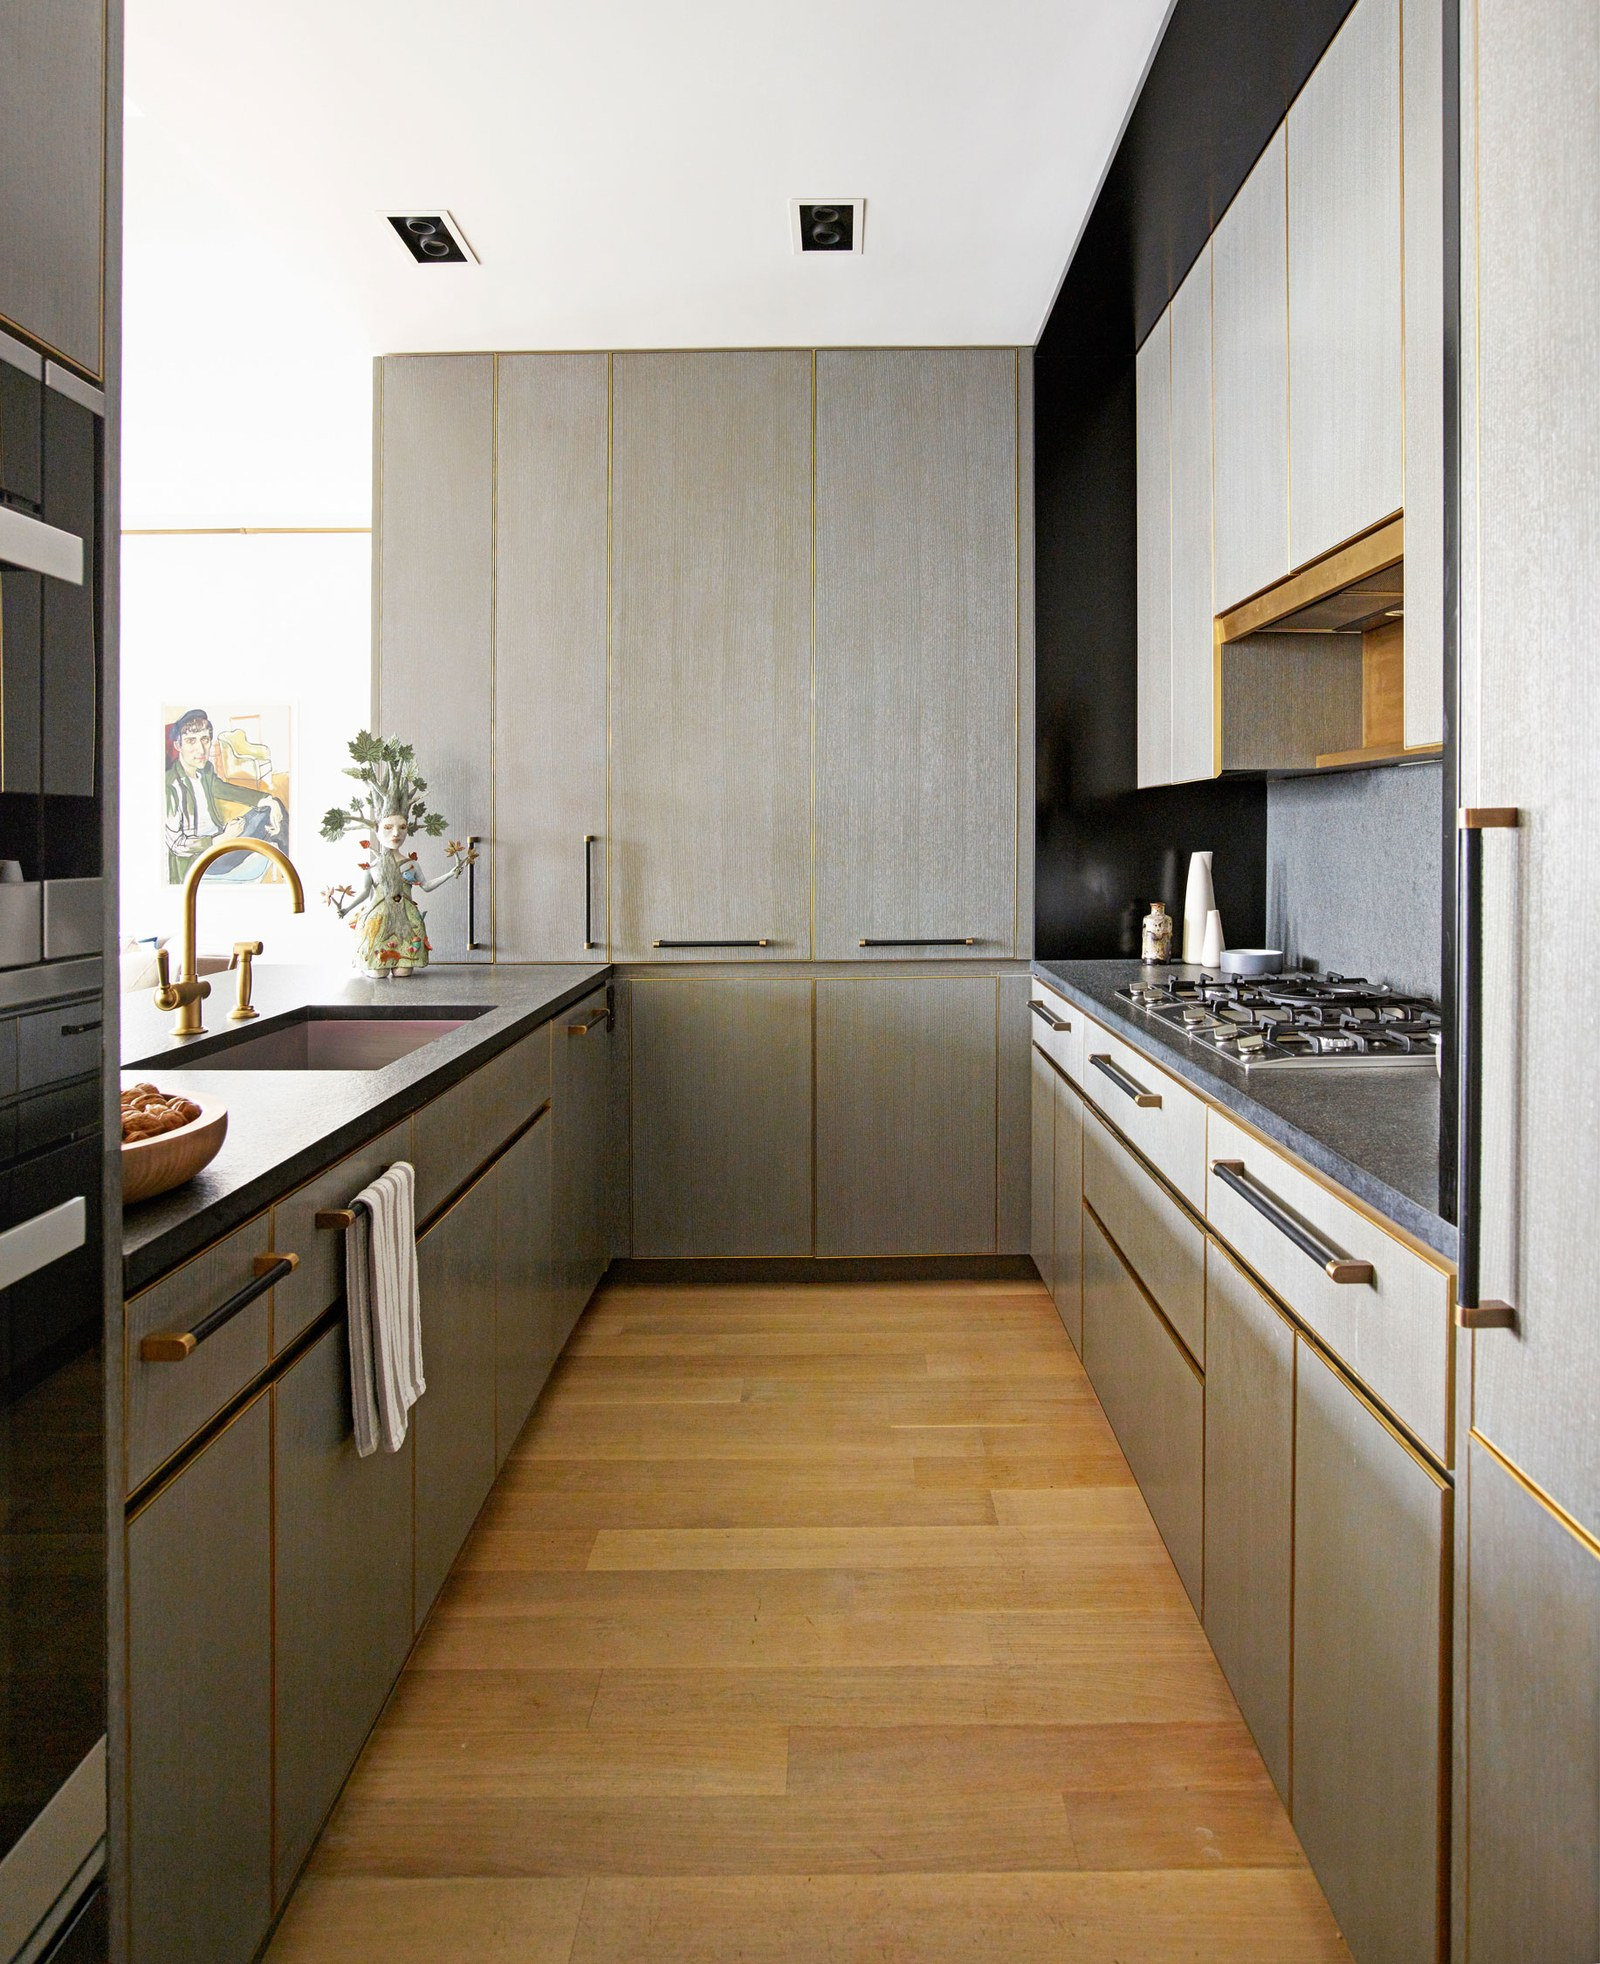 10 Elegant Kitchen Ideas For A Small Kitchen the best small kitchen design ideas for your tiny space 1 2022